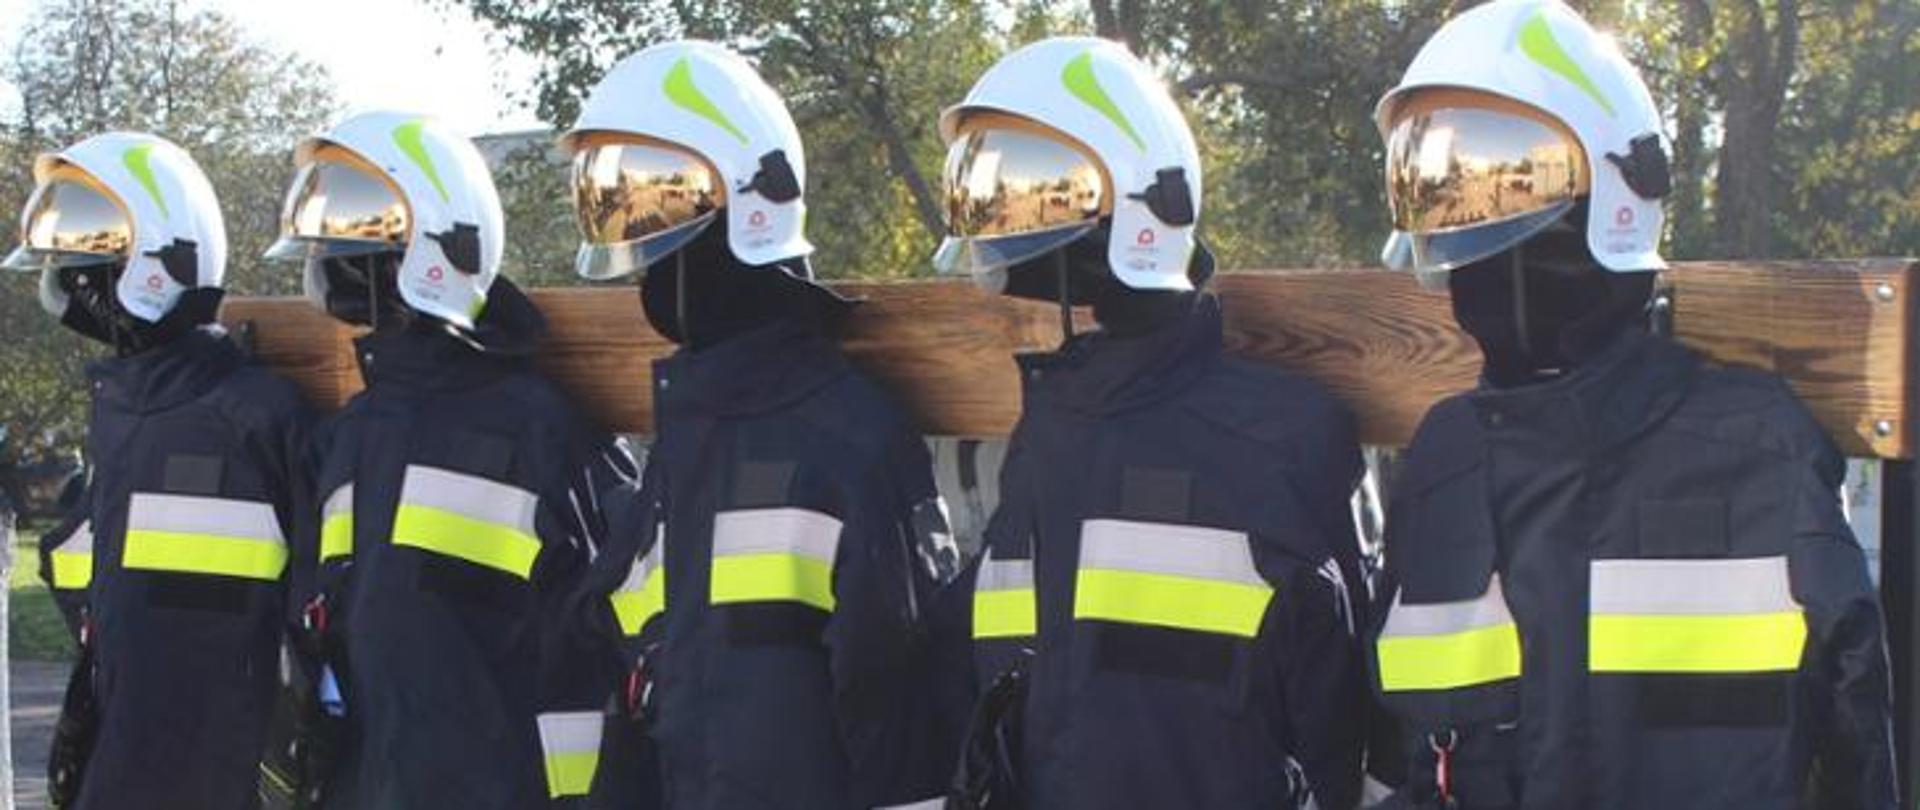 Improving public safety through re-establishing volunteer fire brigades in local communities